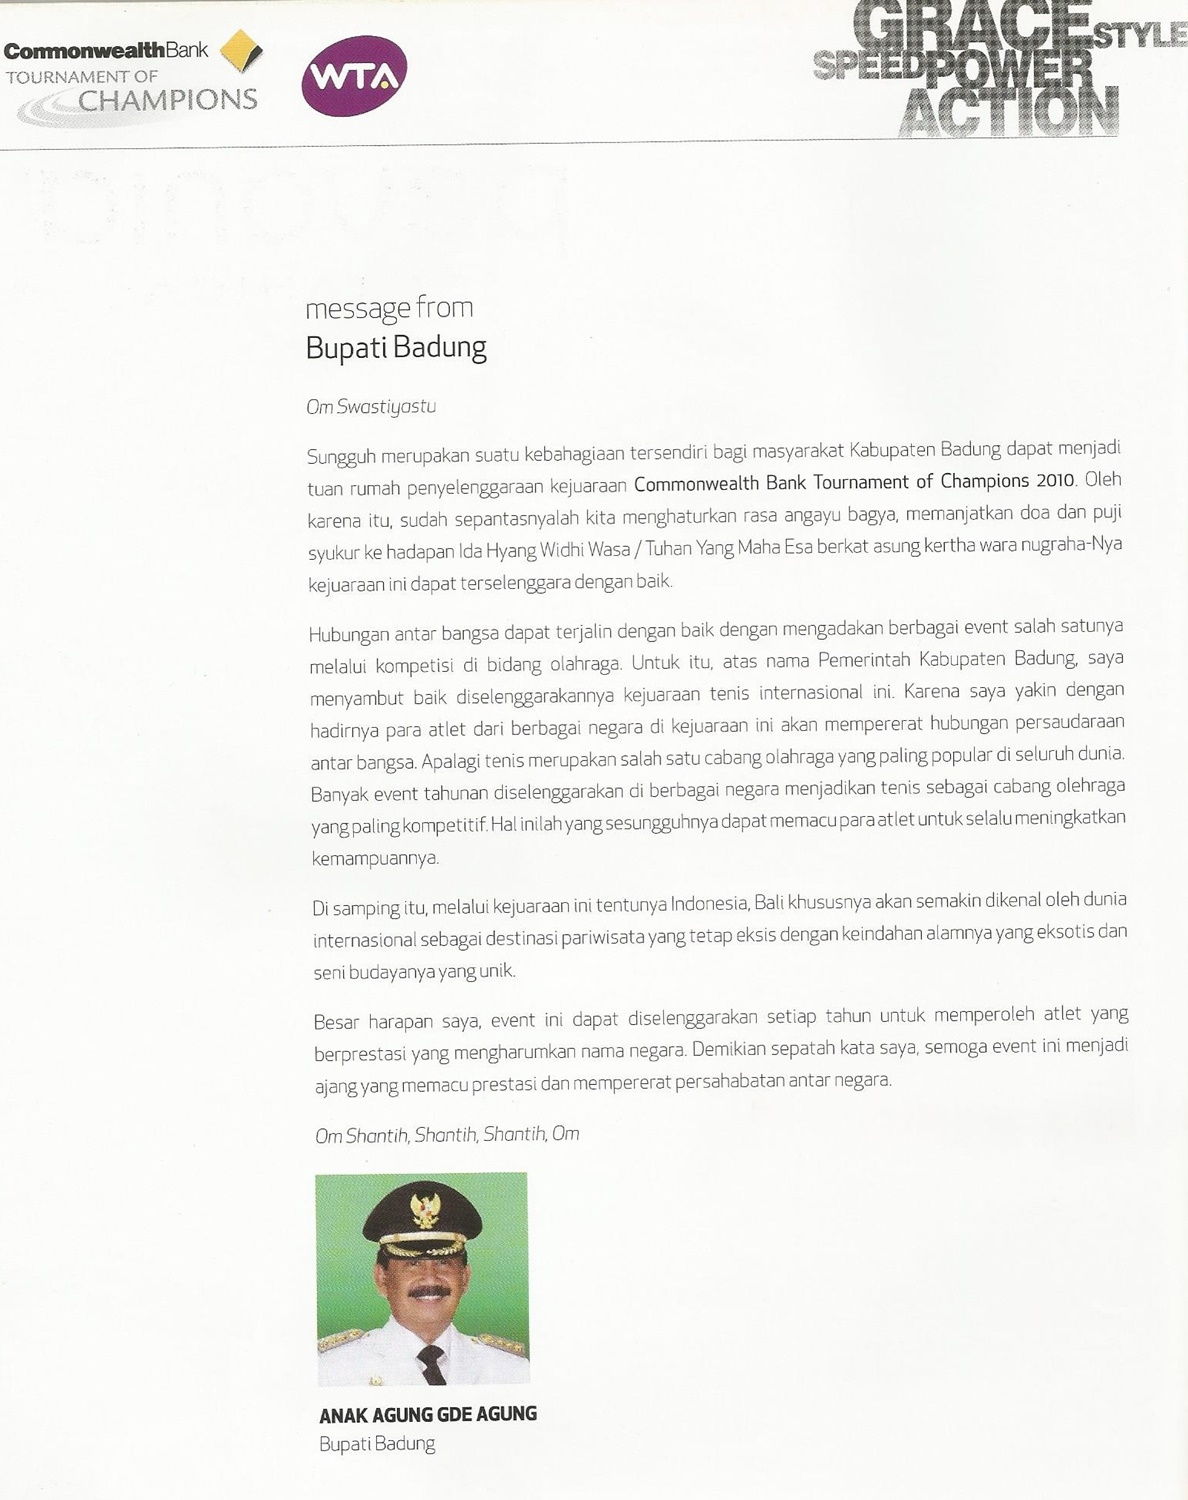 Message from Anak Agung Gede Agung - Bupati Badung